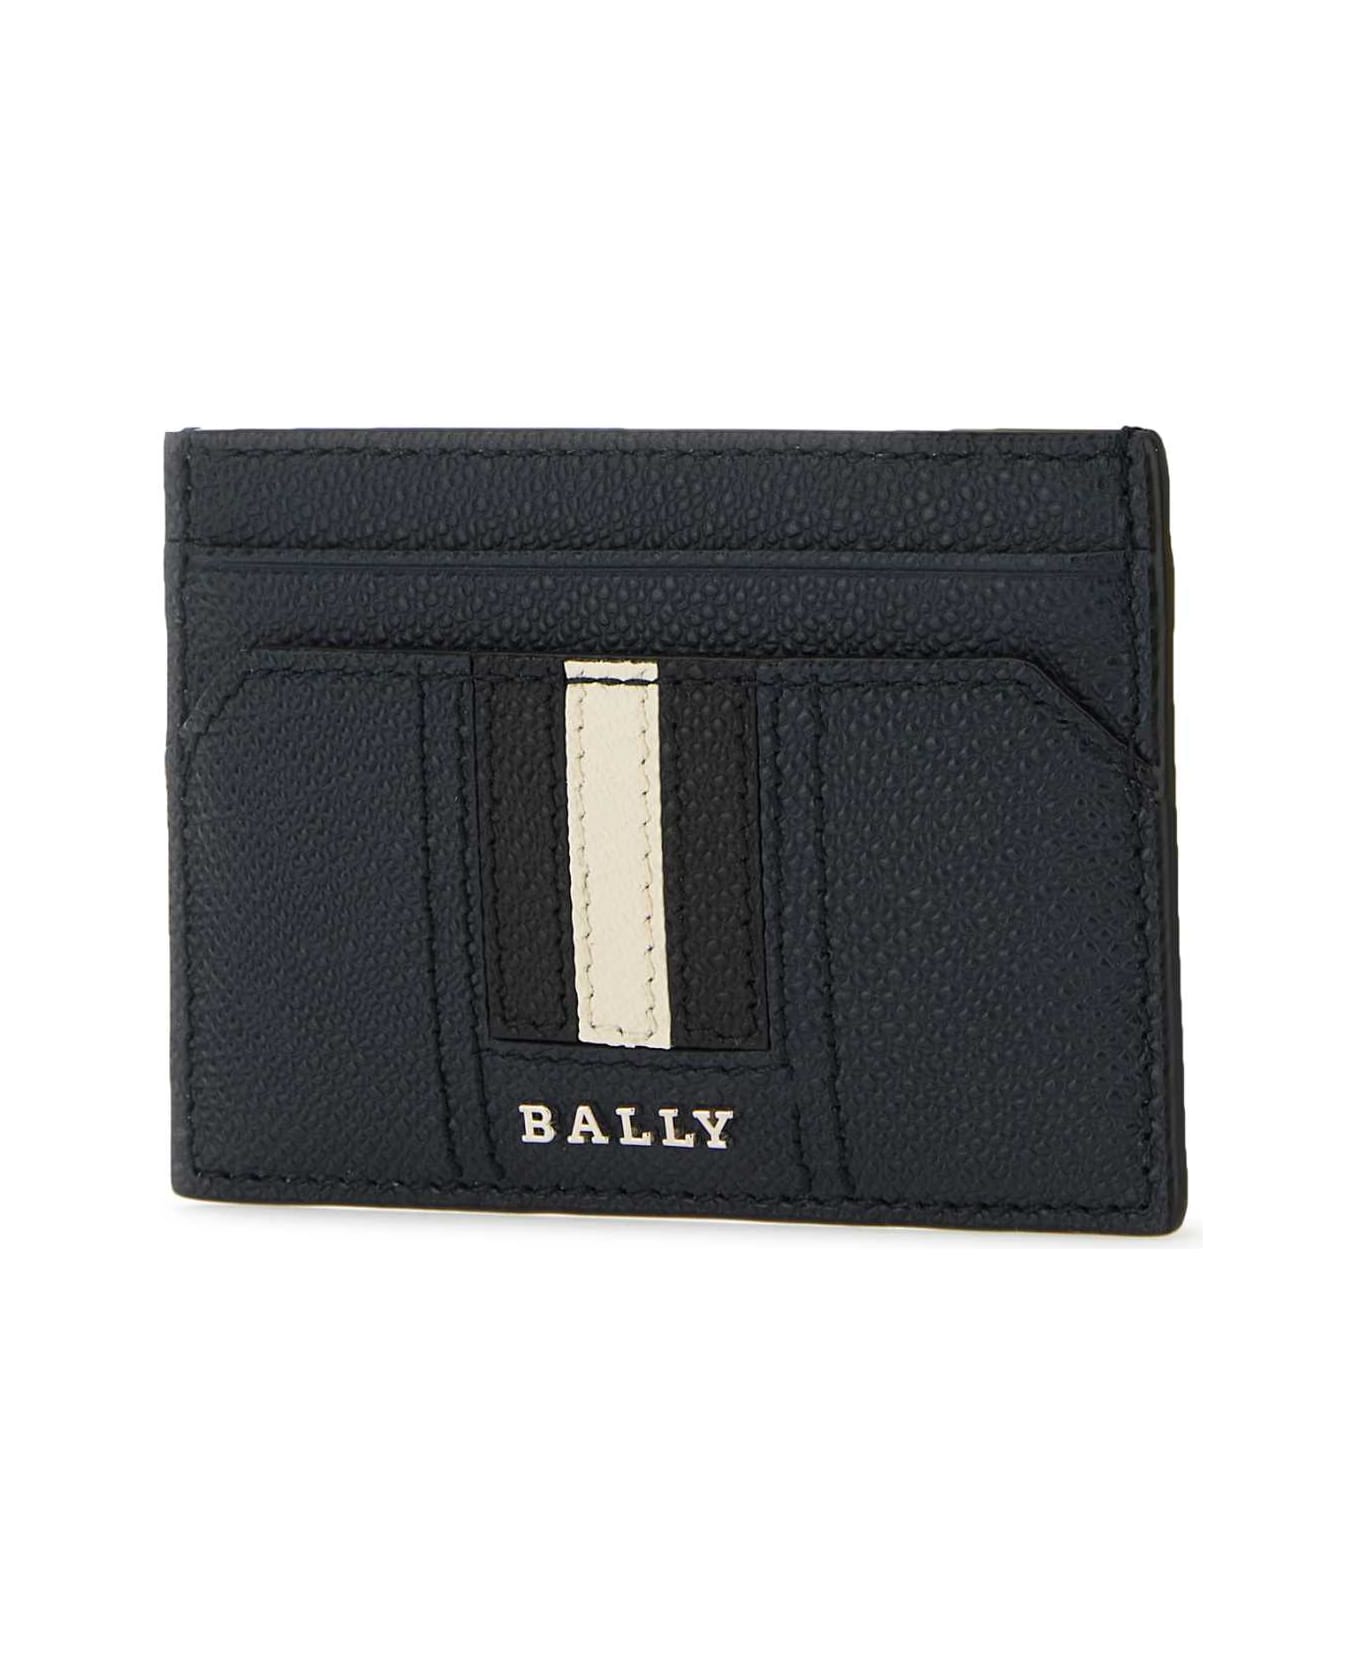 Bally Midnight Blue Leather Cardholder - NEWBLUE